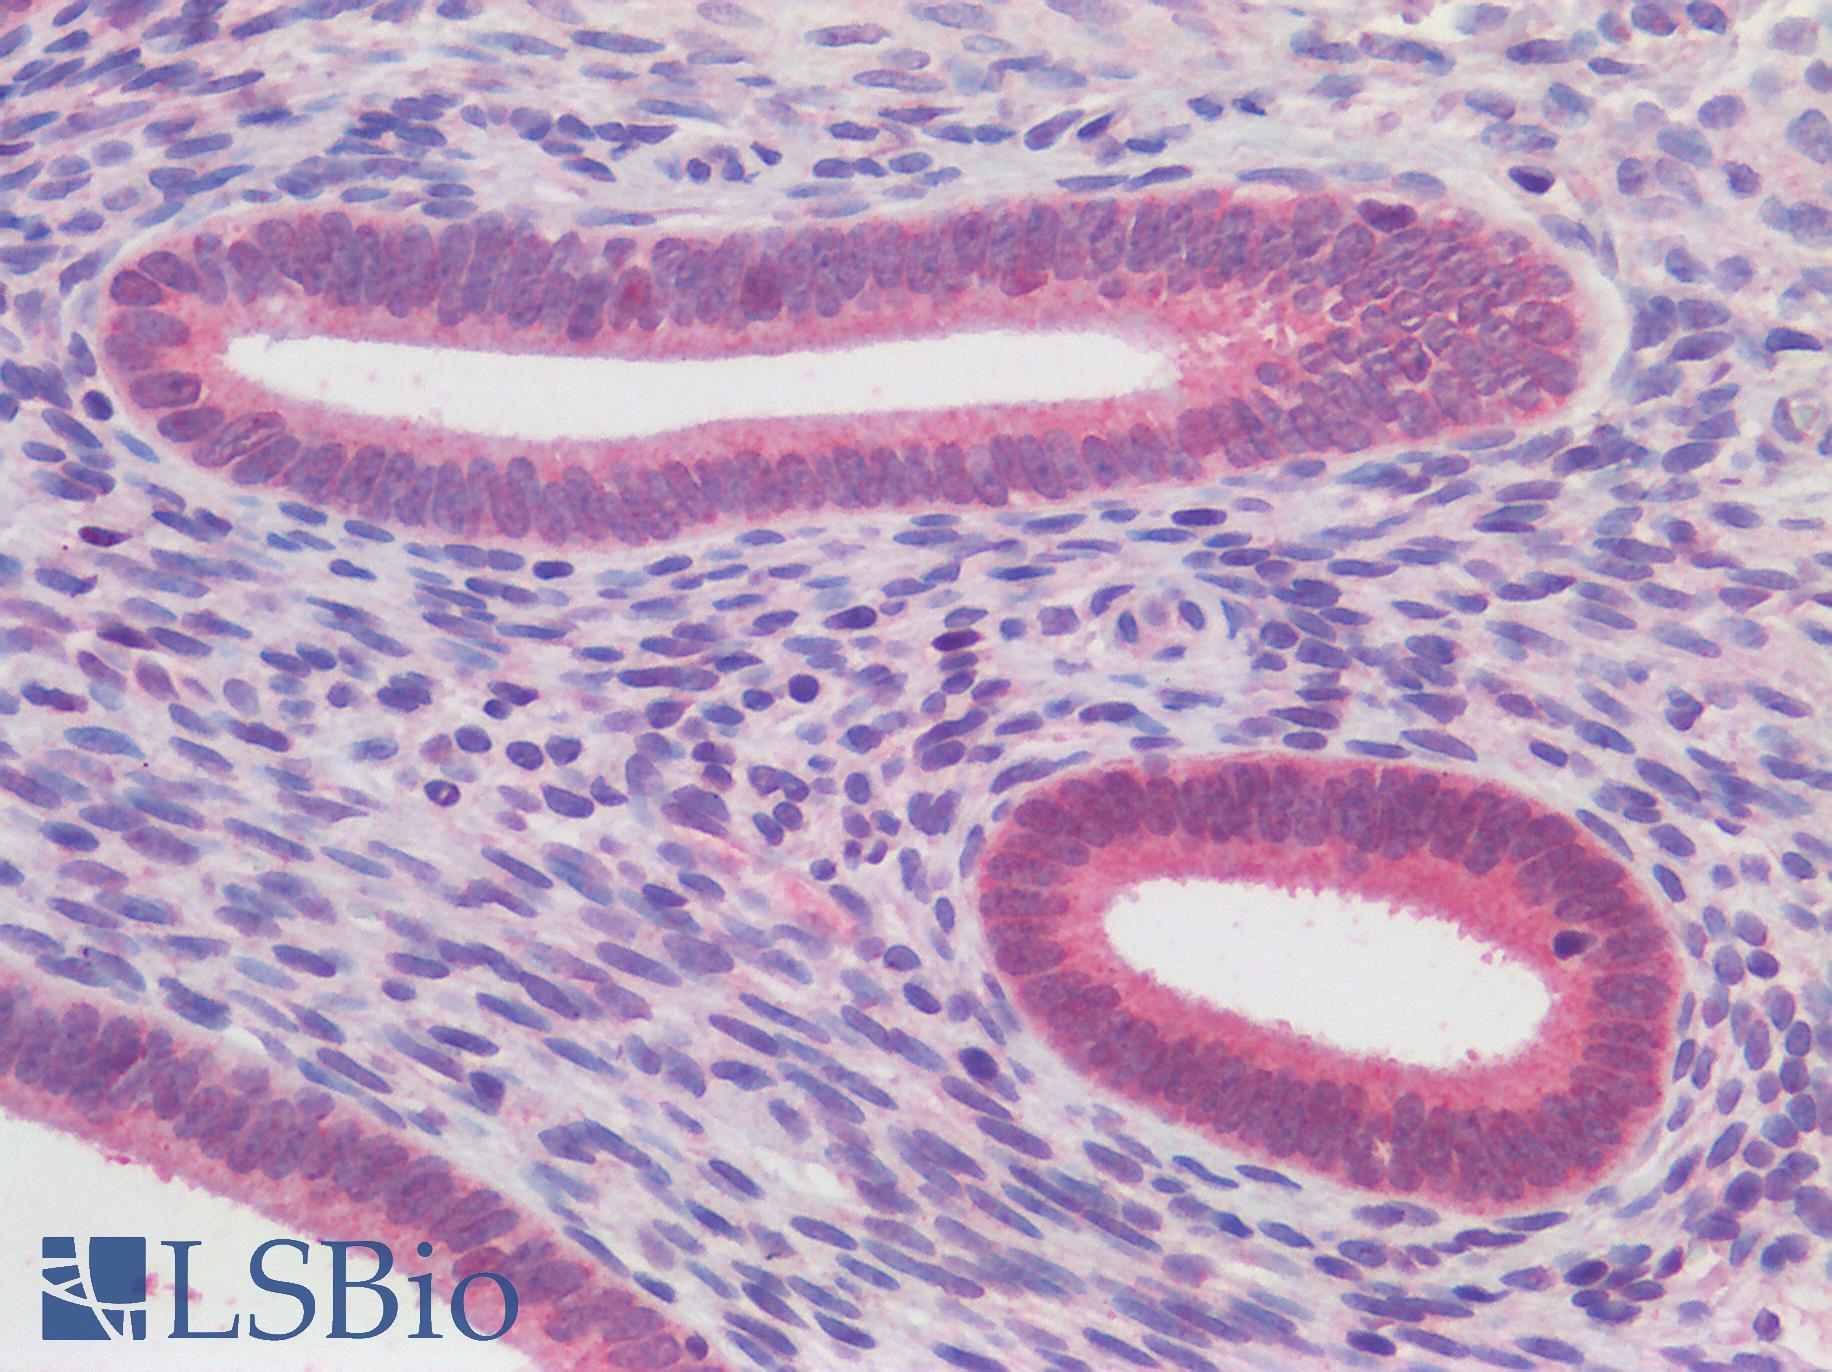 ATG16L1 / ATG16L Antibody - Human Uterus, Endrometrium: Formalin-Fixed, Paraffin-Embedded (FFPE)